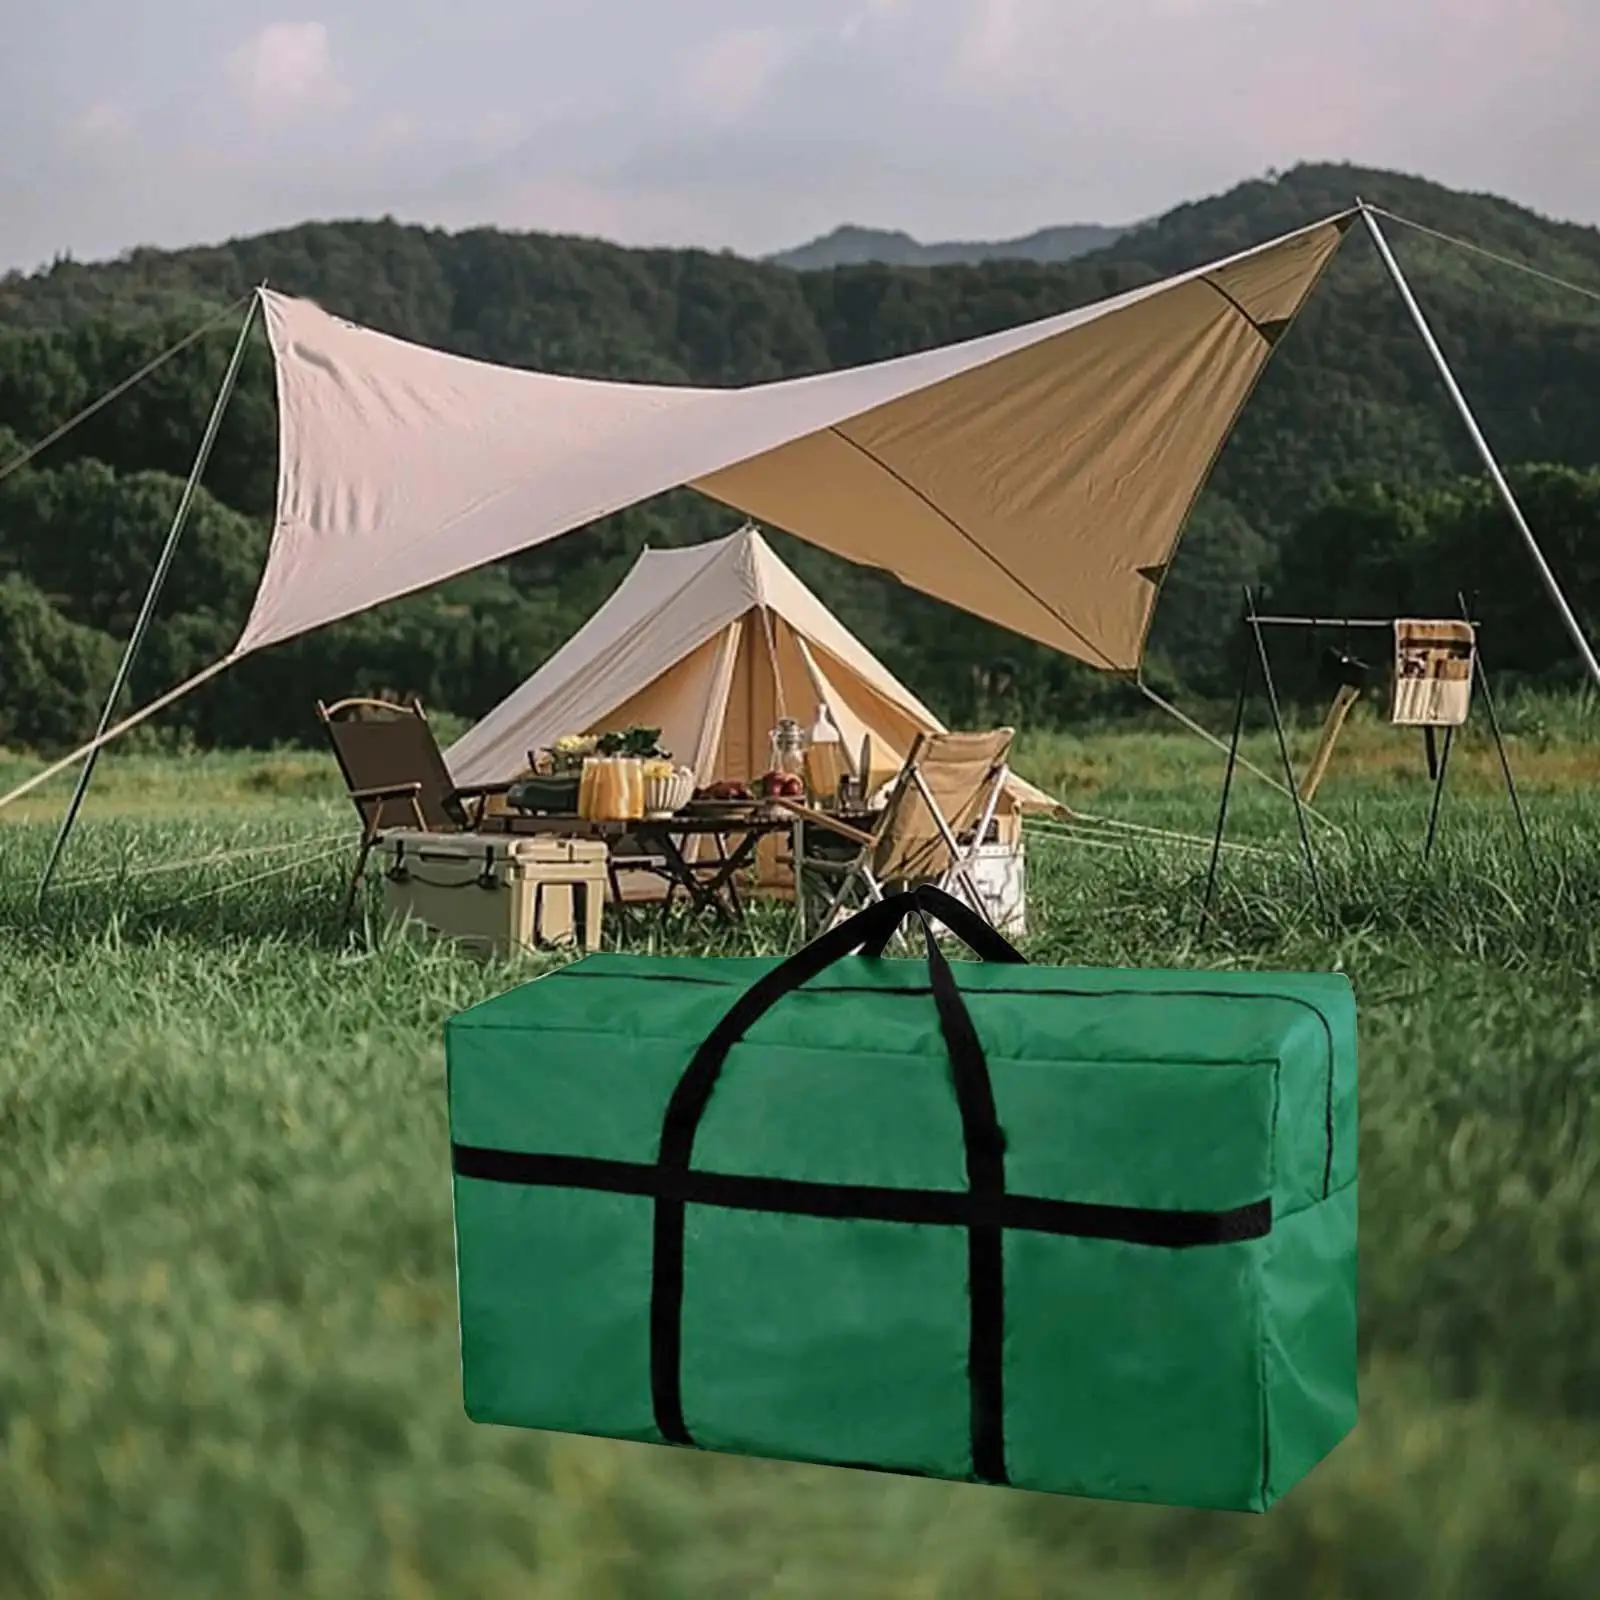 Tent Peg Nails Bag Outdoor Camping Storage Bag for Camping Fishing Gardening